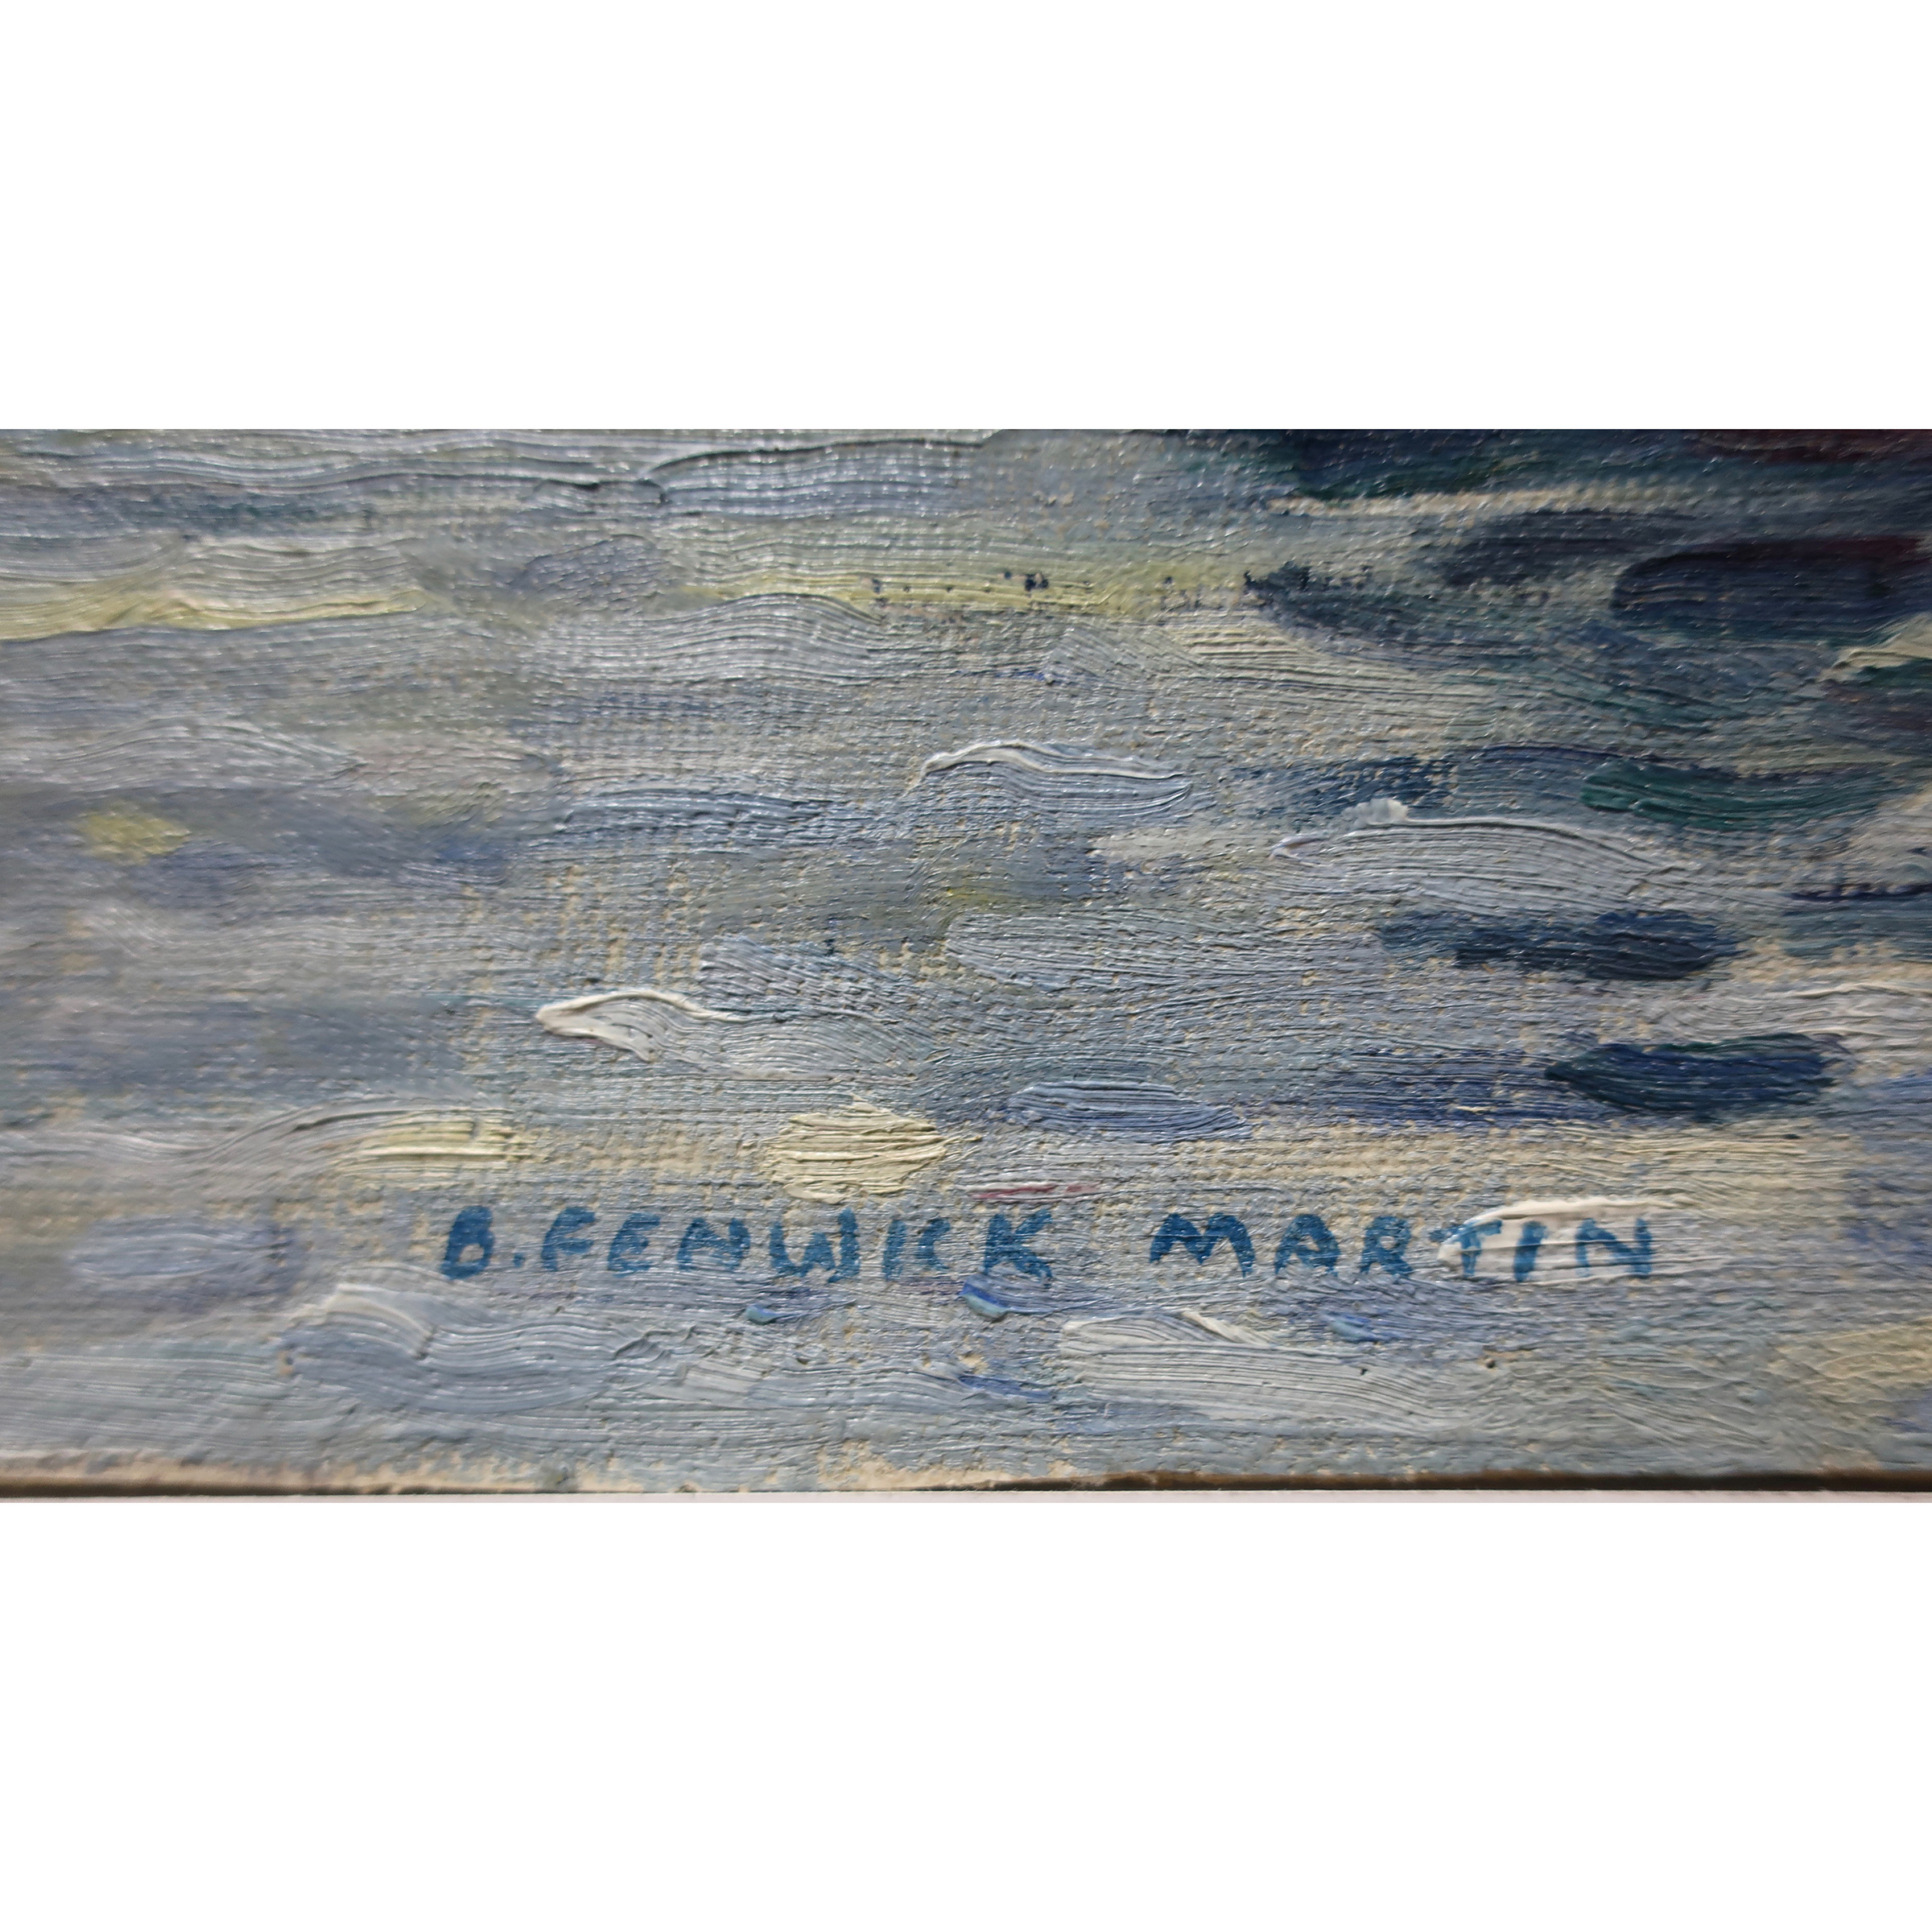 BERNICE FENWICK MARTIN (CANADIAN, 1902-1999)  